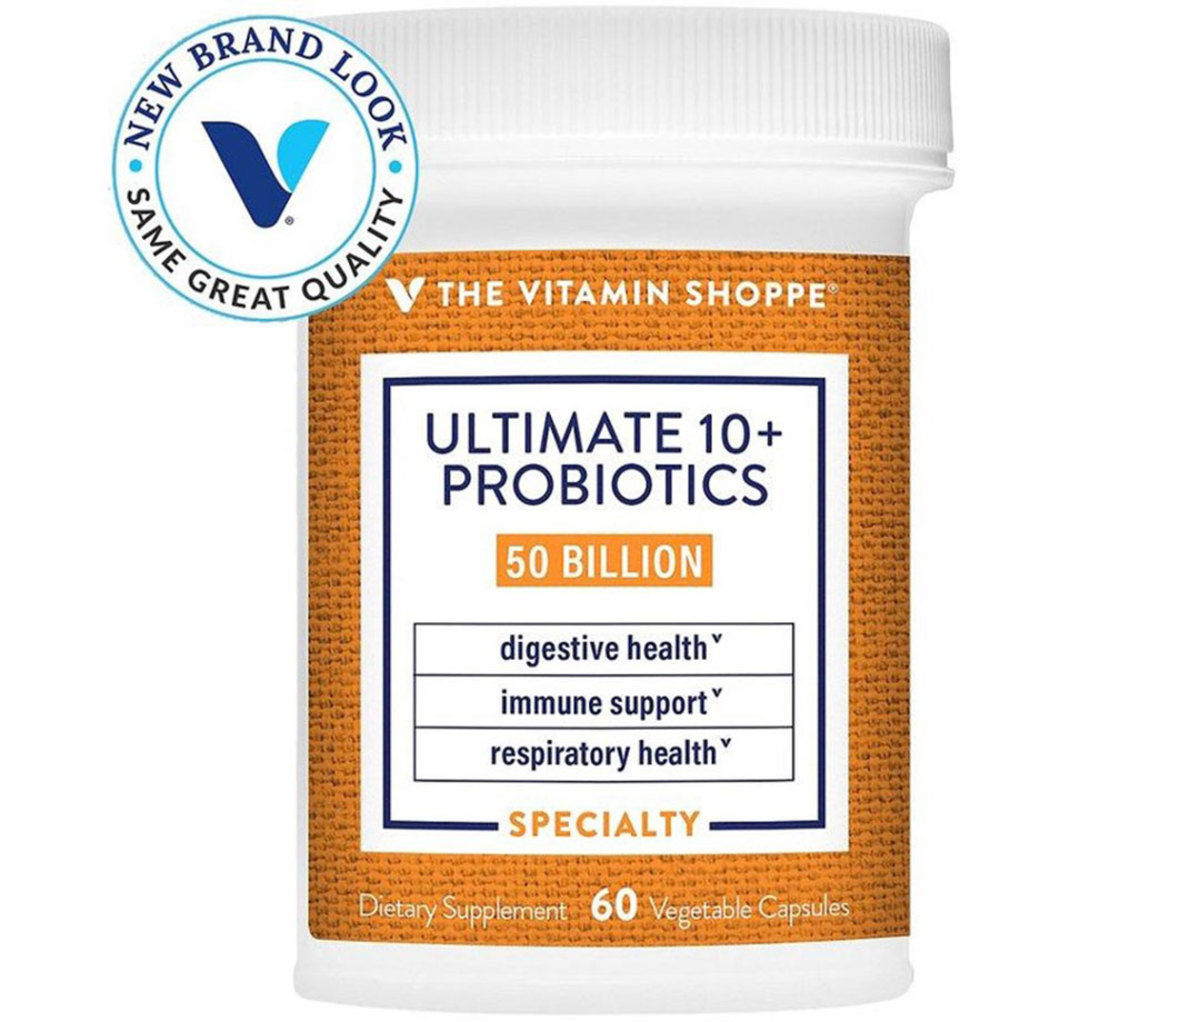 The Vitamin Shoppe Probiotic